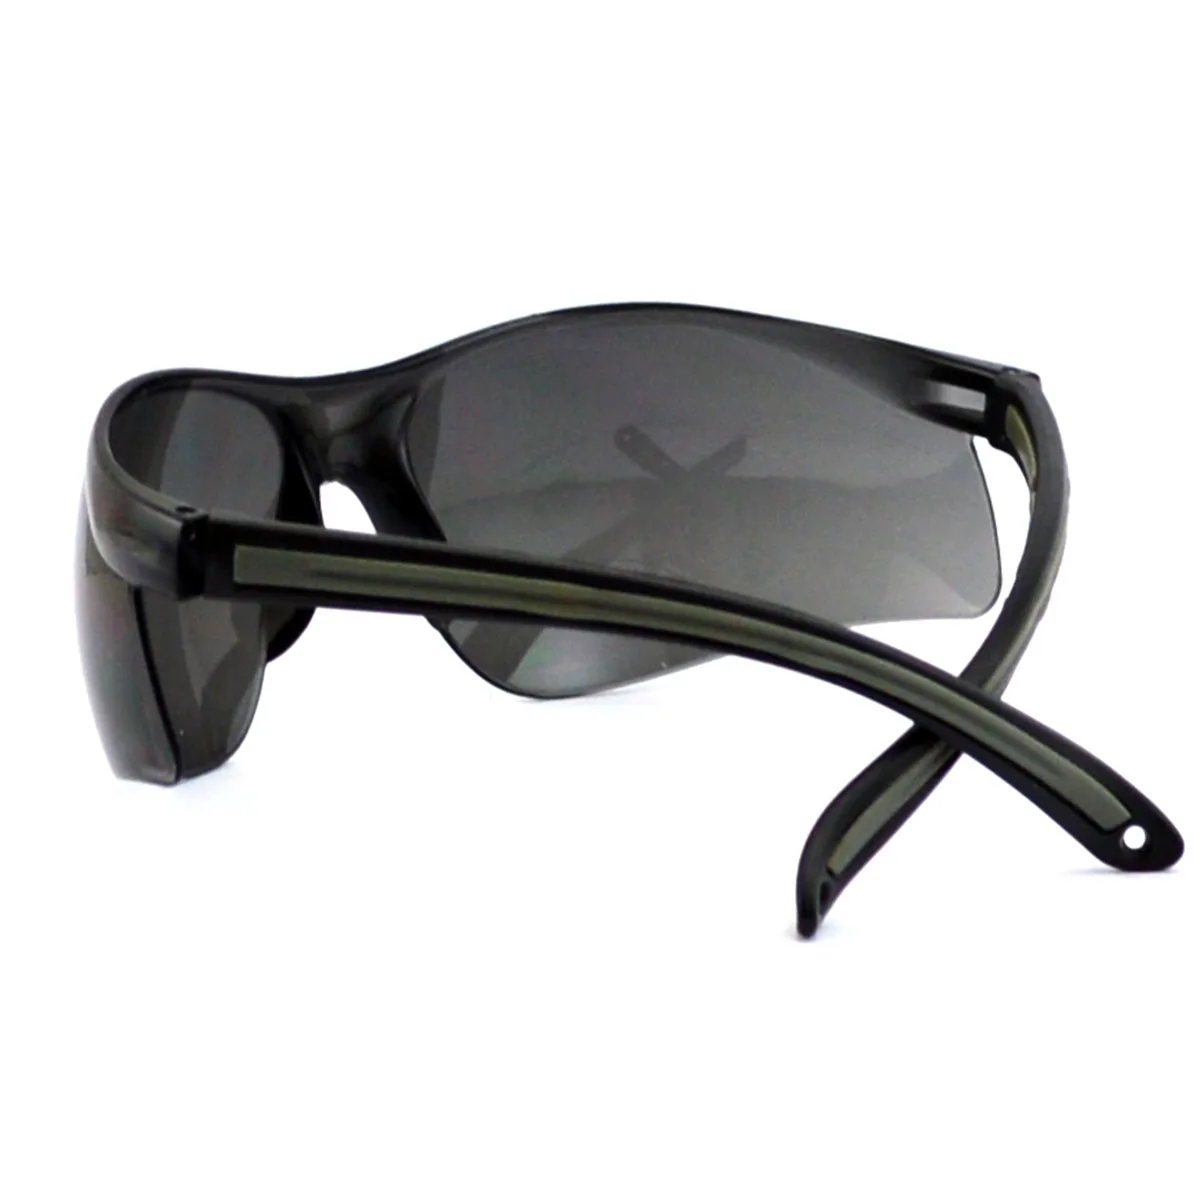 
Industrial Welding z87.1 safety Glasses Sunglasses Block Strong Light 